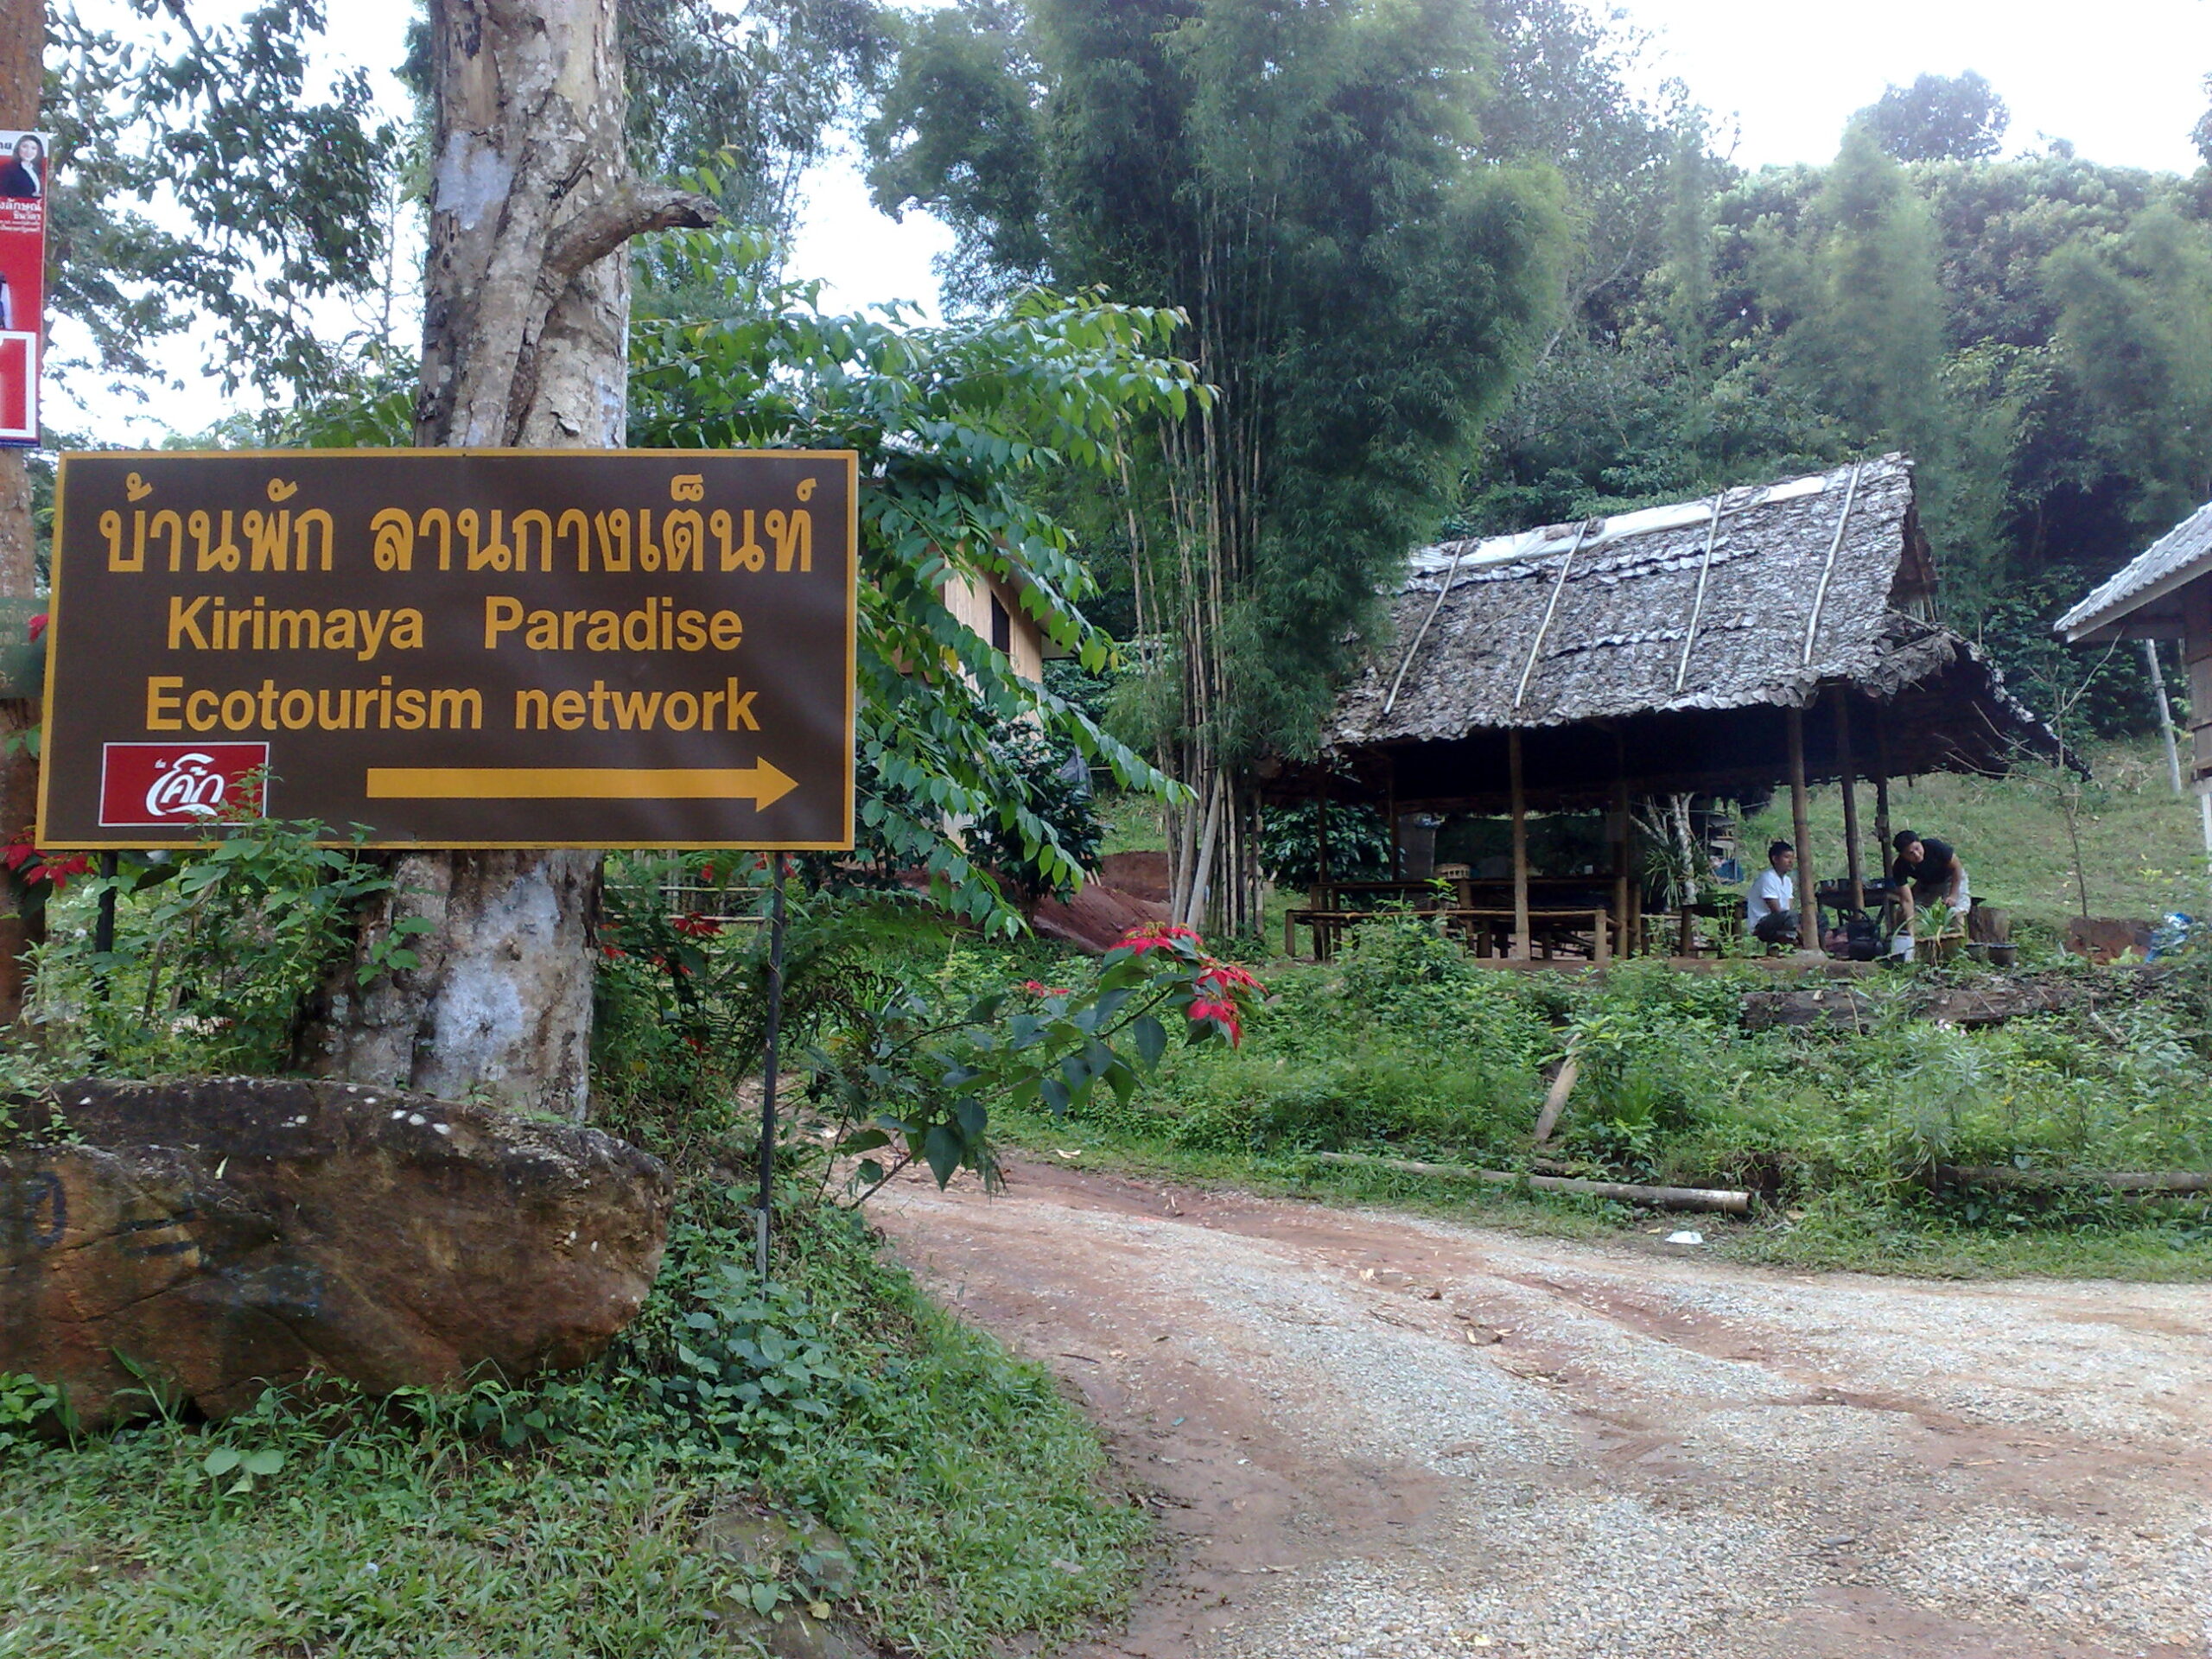 Day 4 - Visited Kirimaya Paradise Ecotourism : Chiang Mai, Thailand (Nov'11) 8